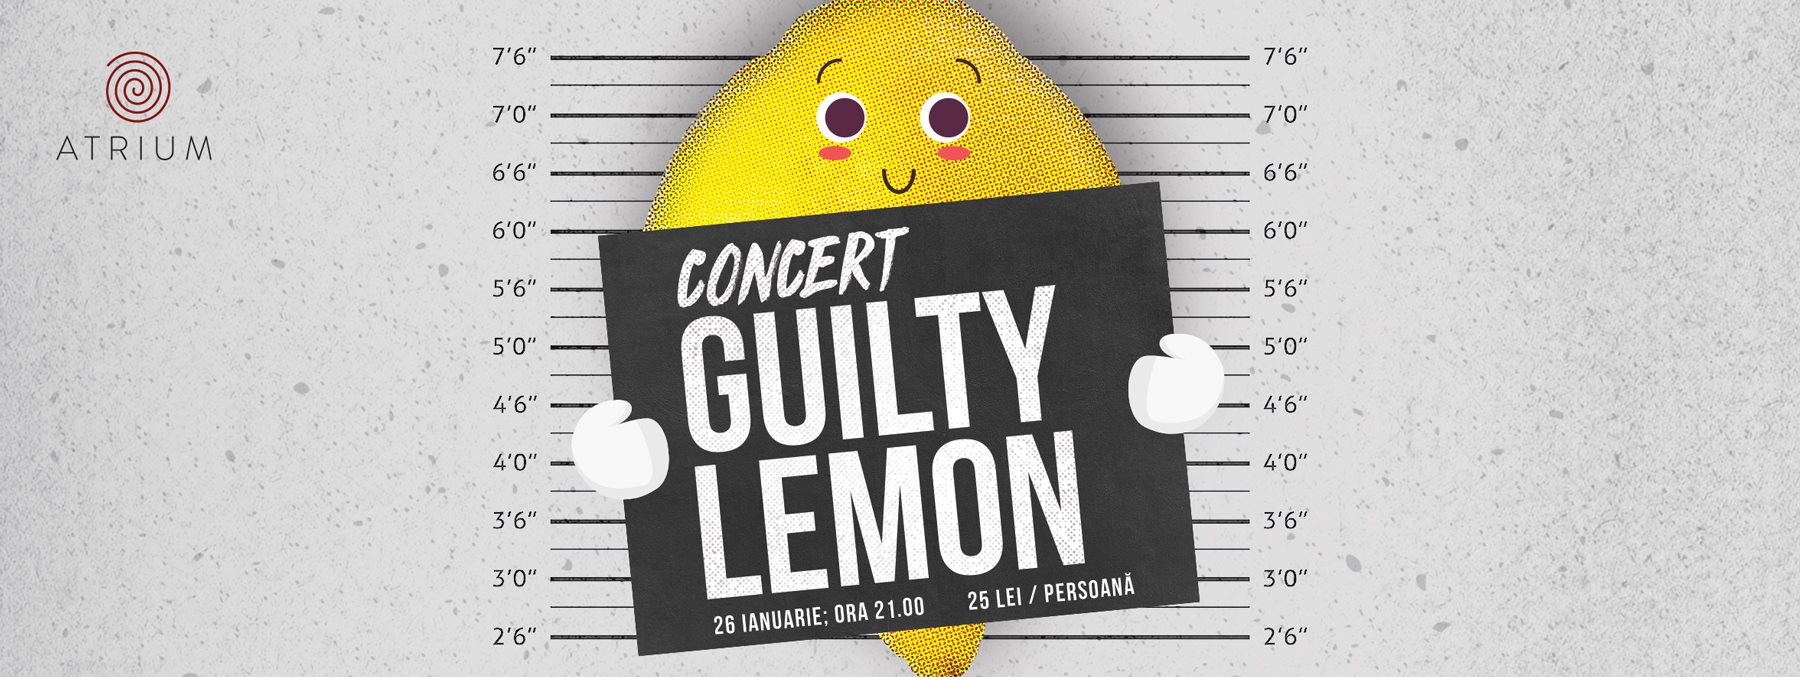 Concert: Guilty Lemon